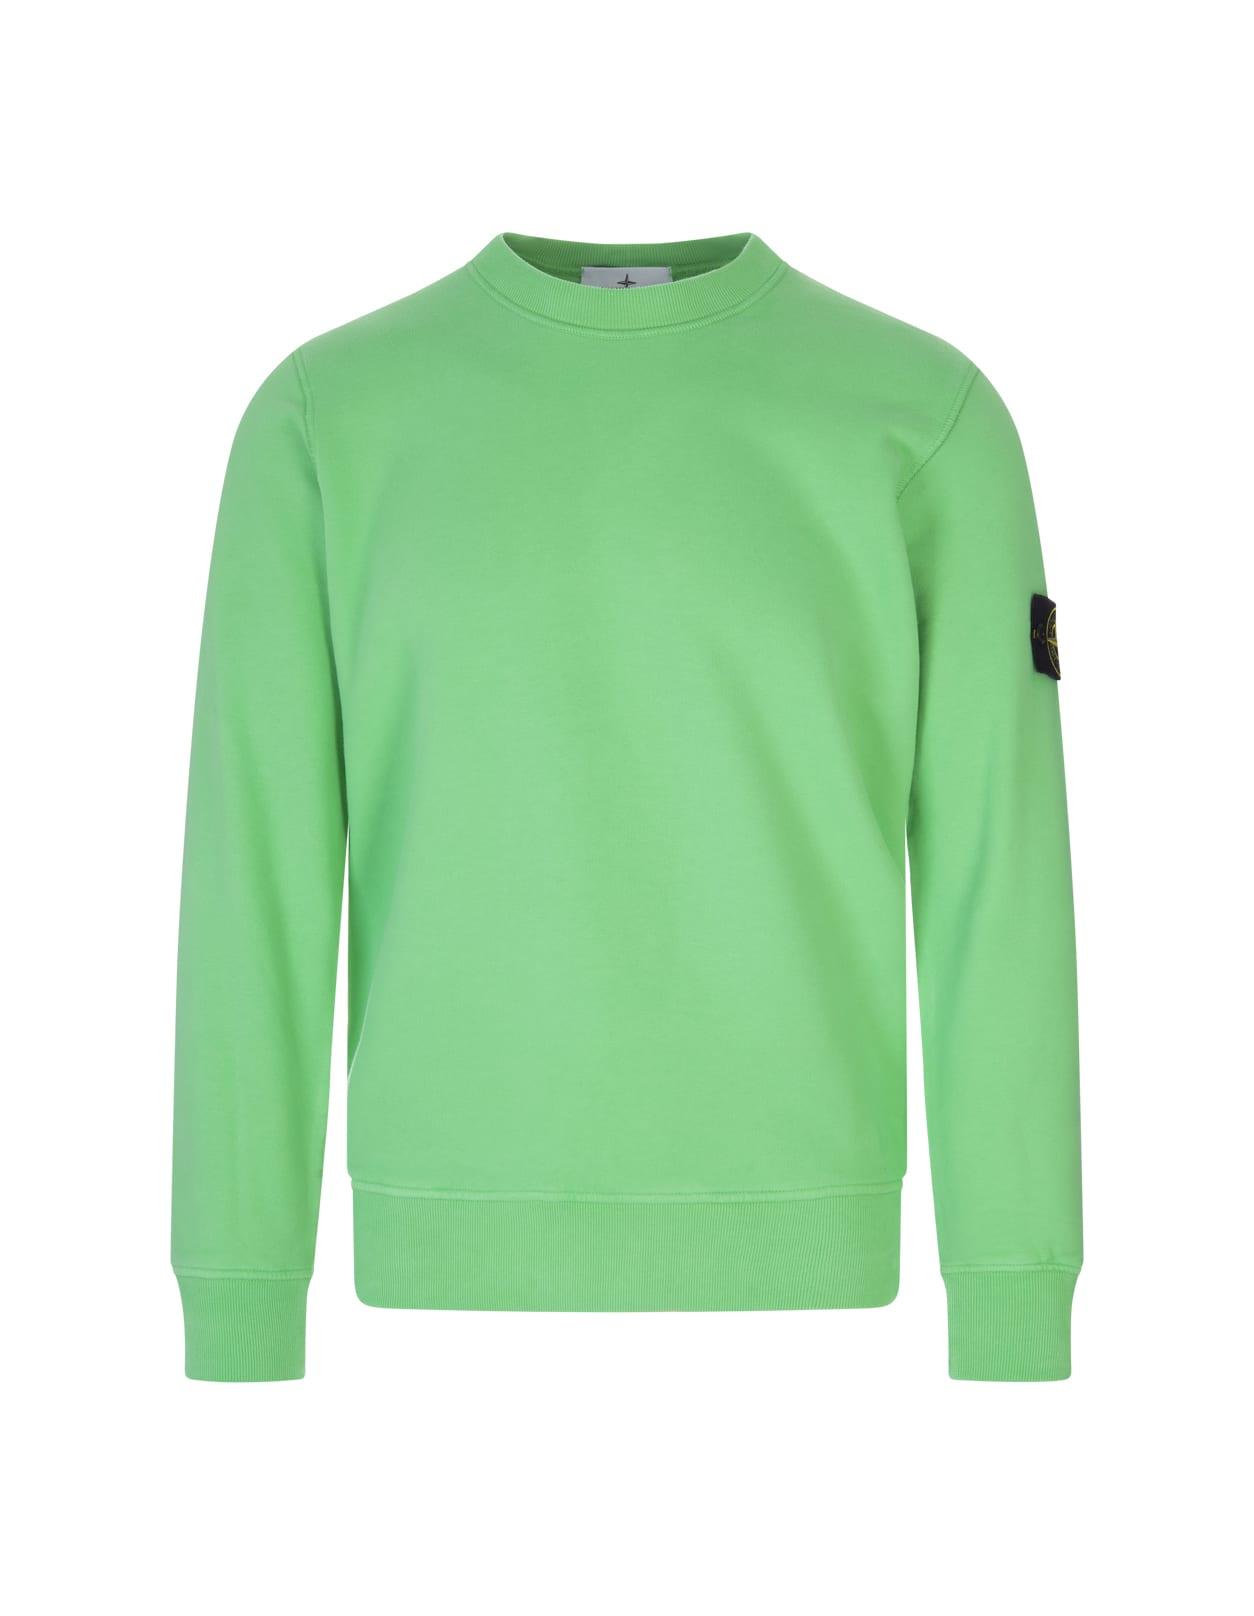 Stone Island Crew-neck Sweatshirt In Light Green Cotton for Men | Lyst